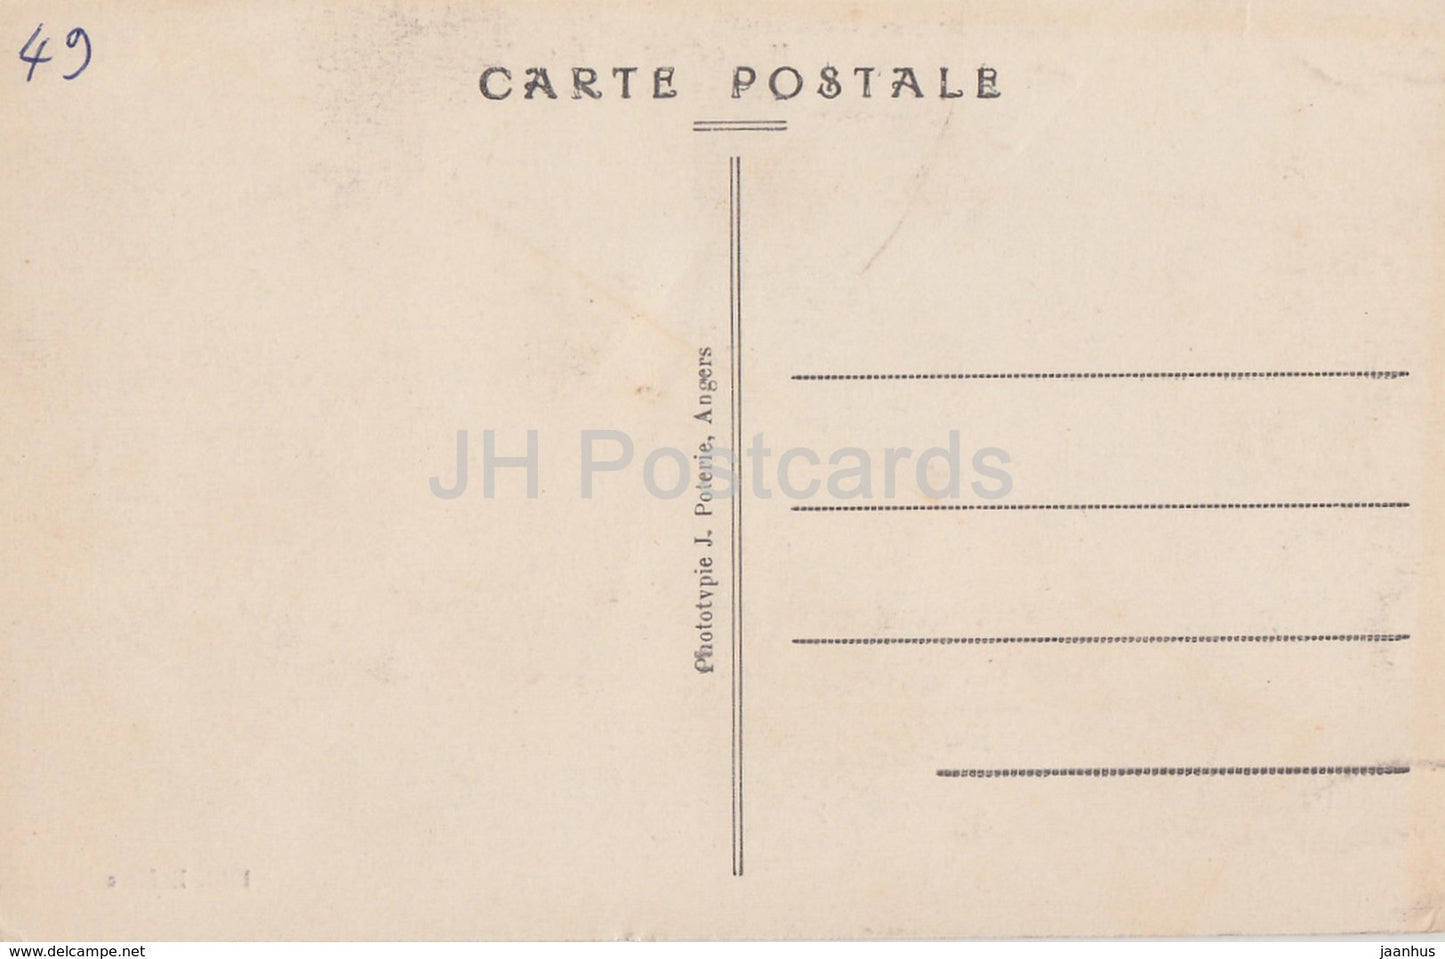 Marce - Chateau de la Brideraie - castle - old postcard - France - unused